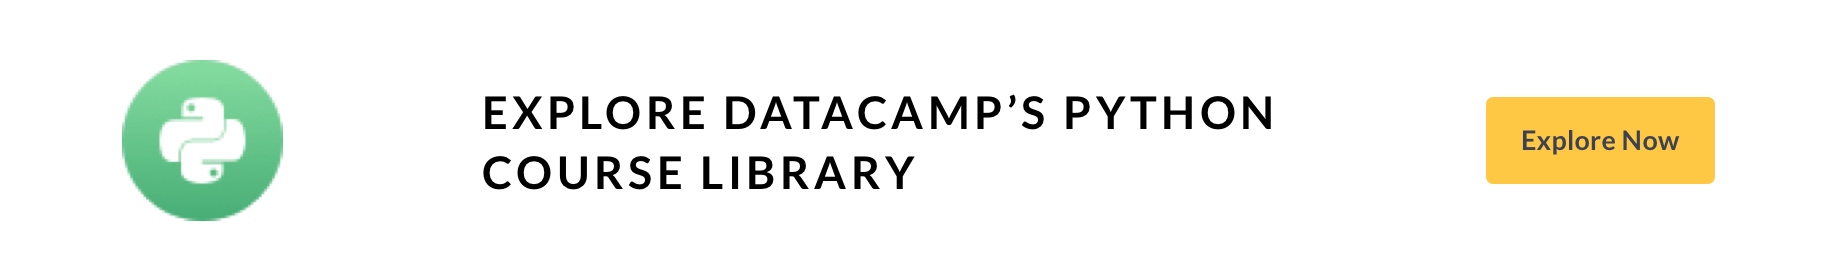 datacamp's python course library banner